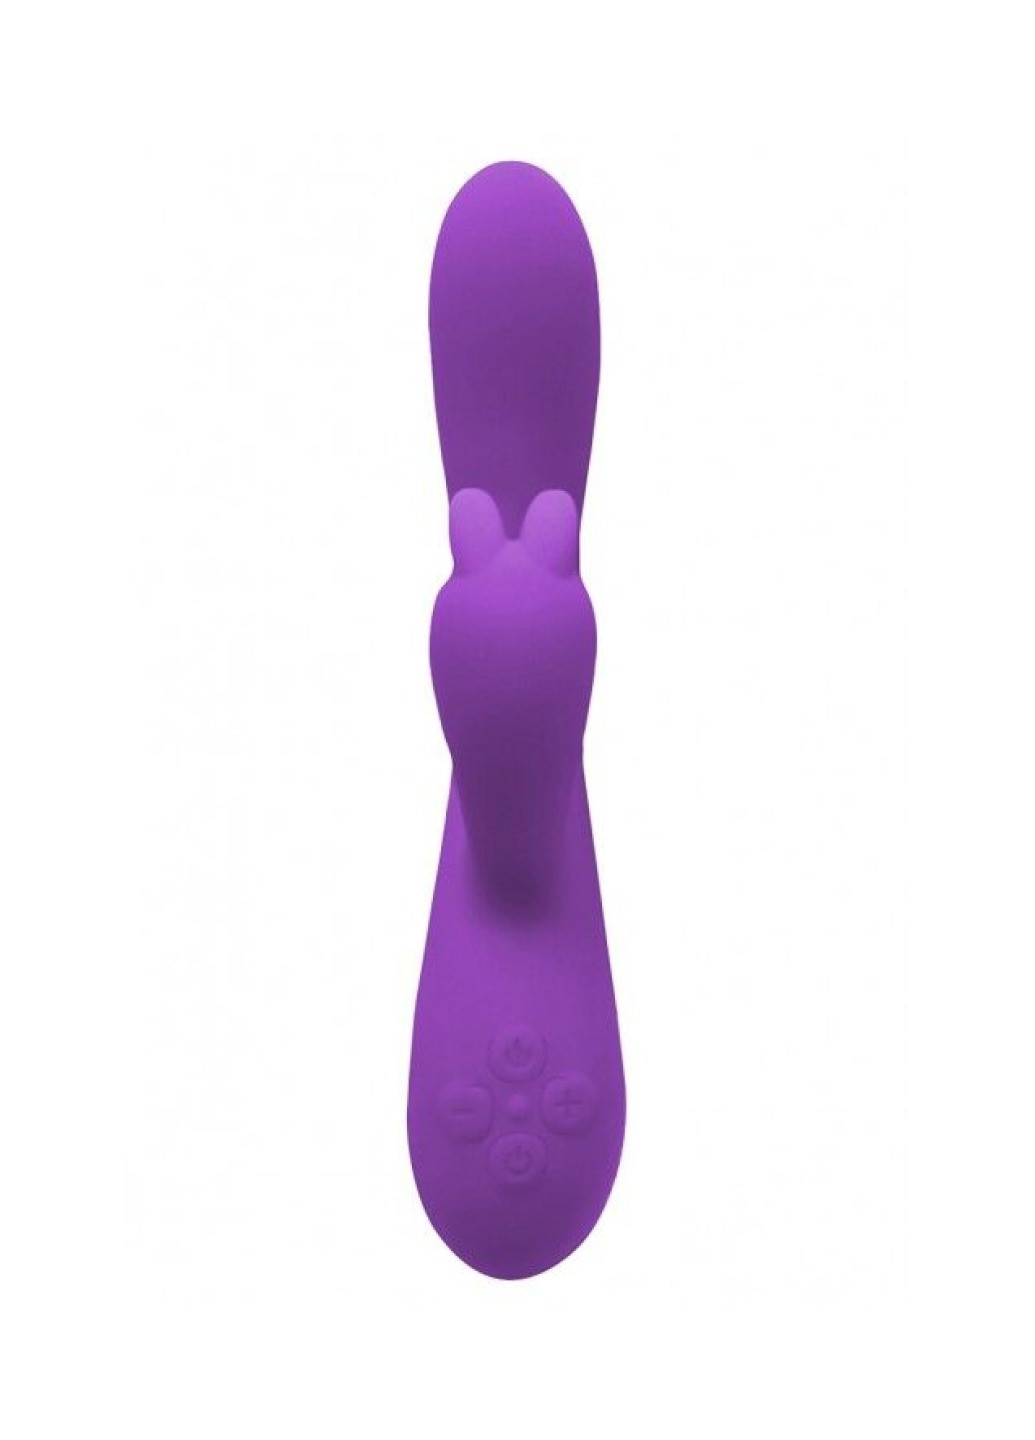 Вибратор-кролик Gili-Gili Vibrator with Heat Purple, отросток с ушками, подогрев до 40°С Wooomy (272615983)